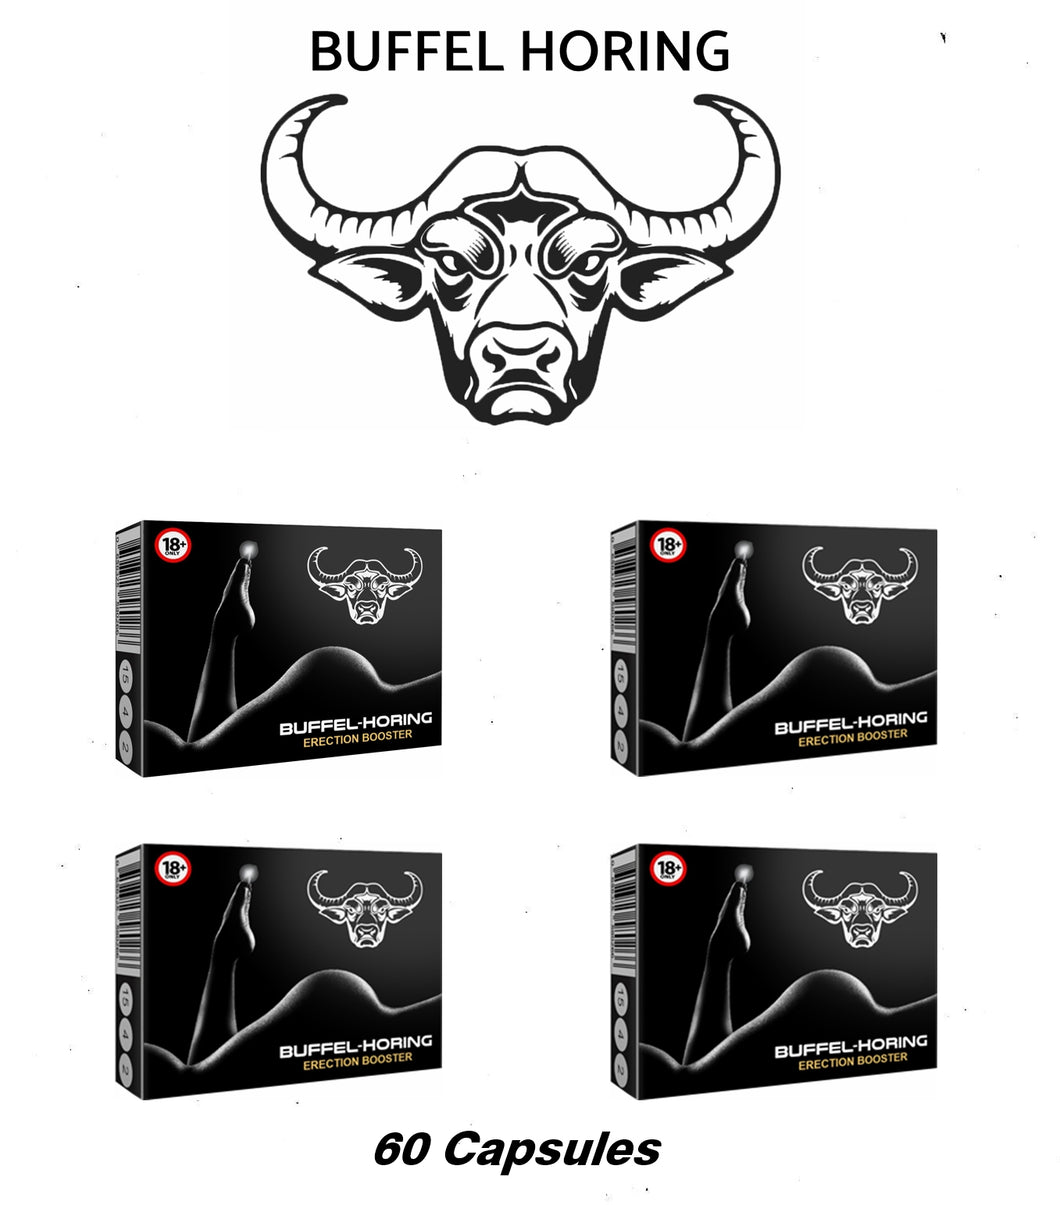 Buffel-Horing (4 Boxes) - 60 Capsules